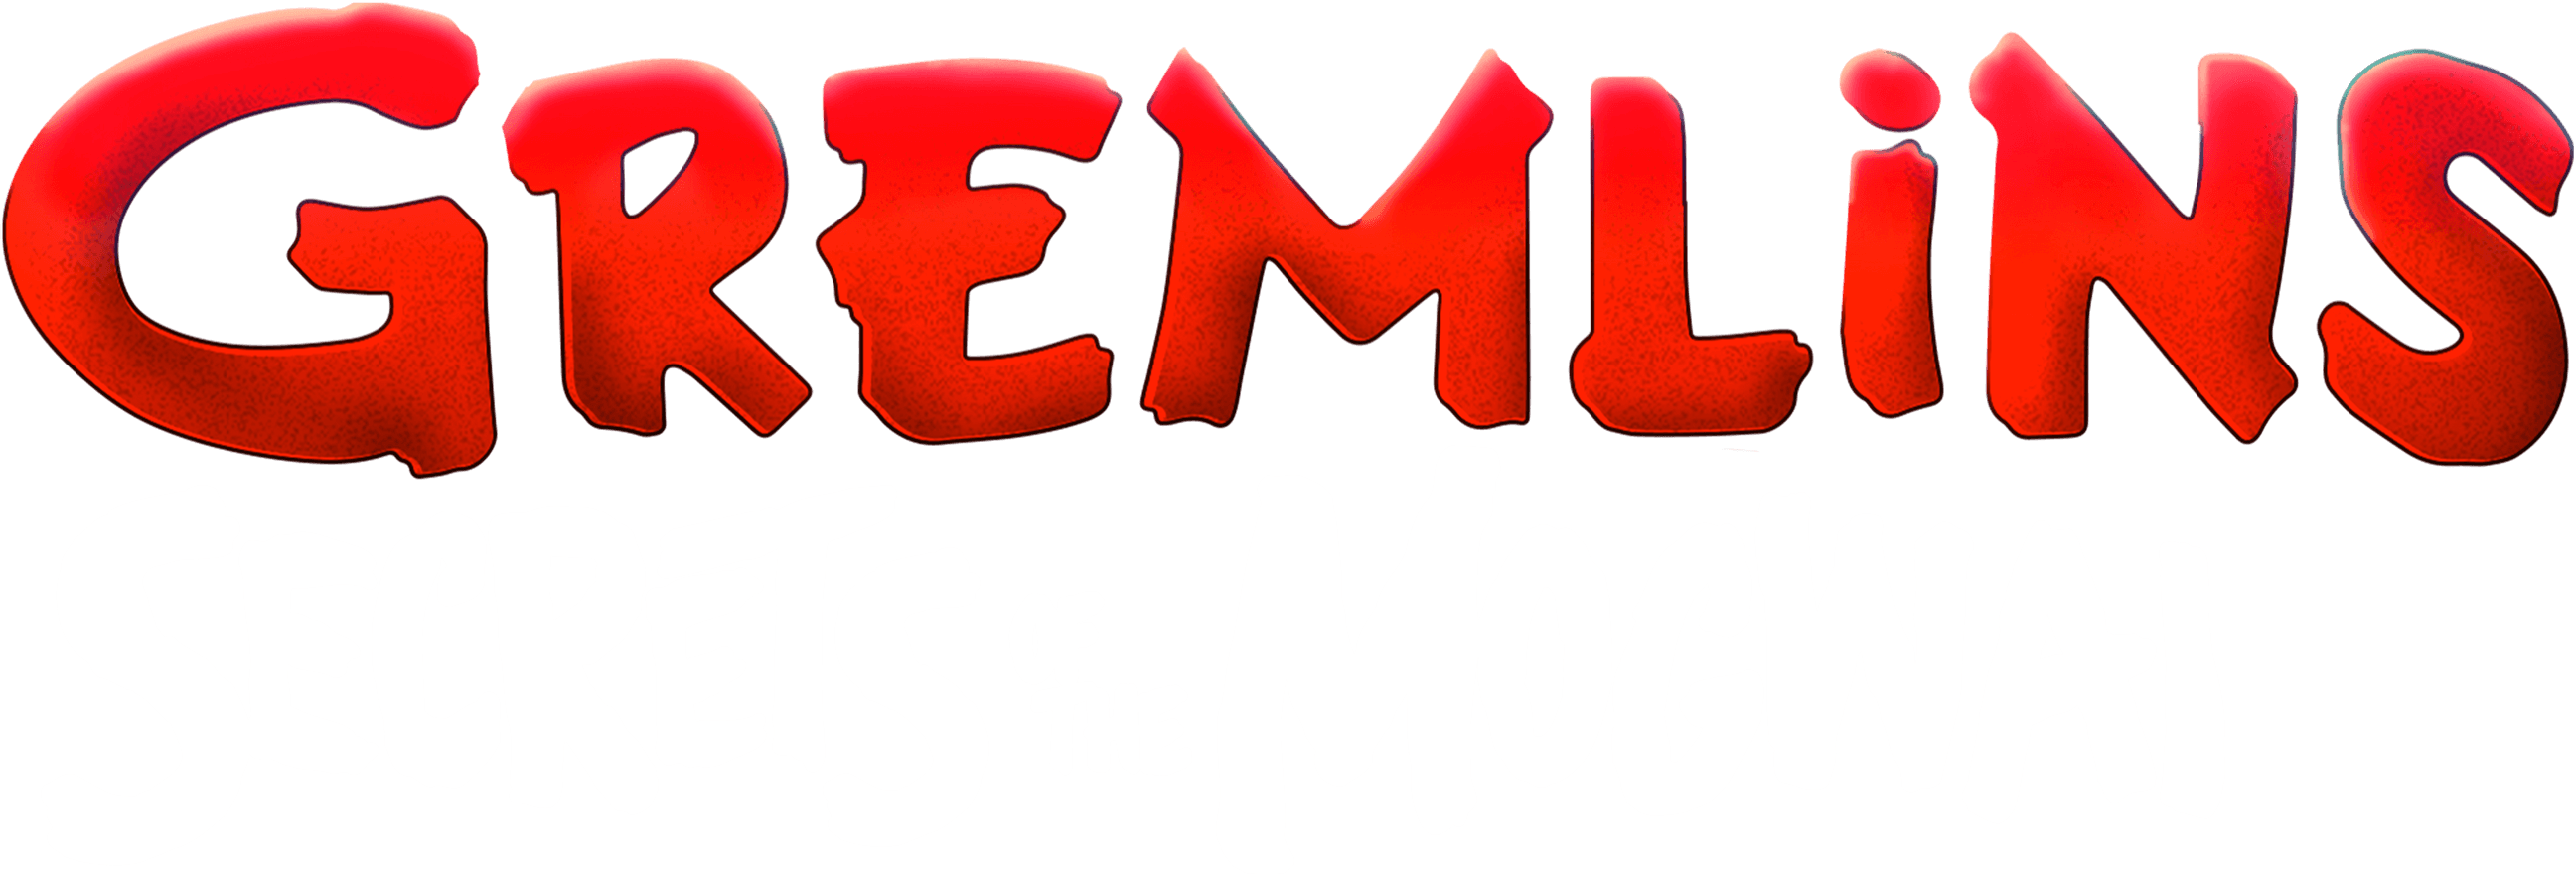 Gremlins: Secrets of the Mogwai logo